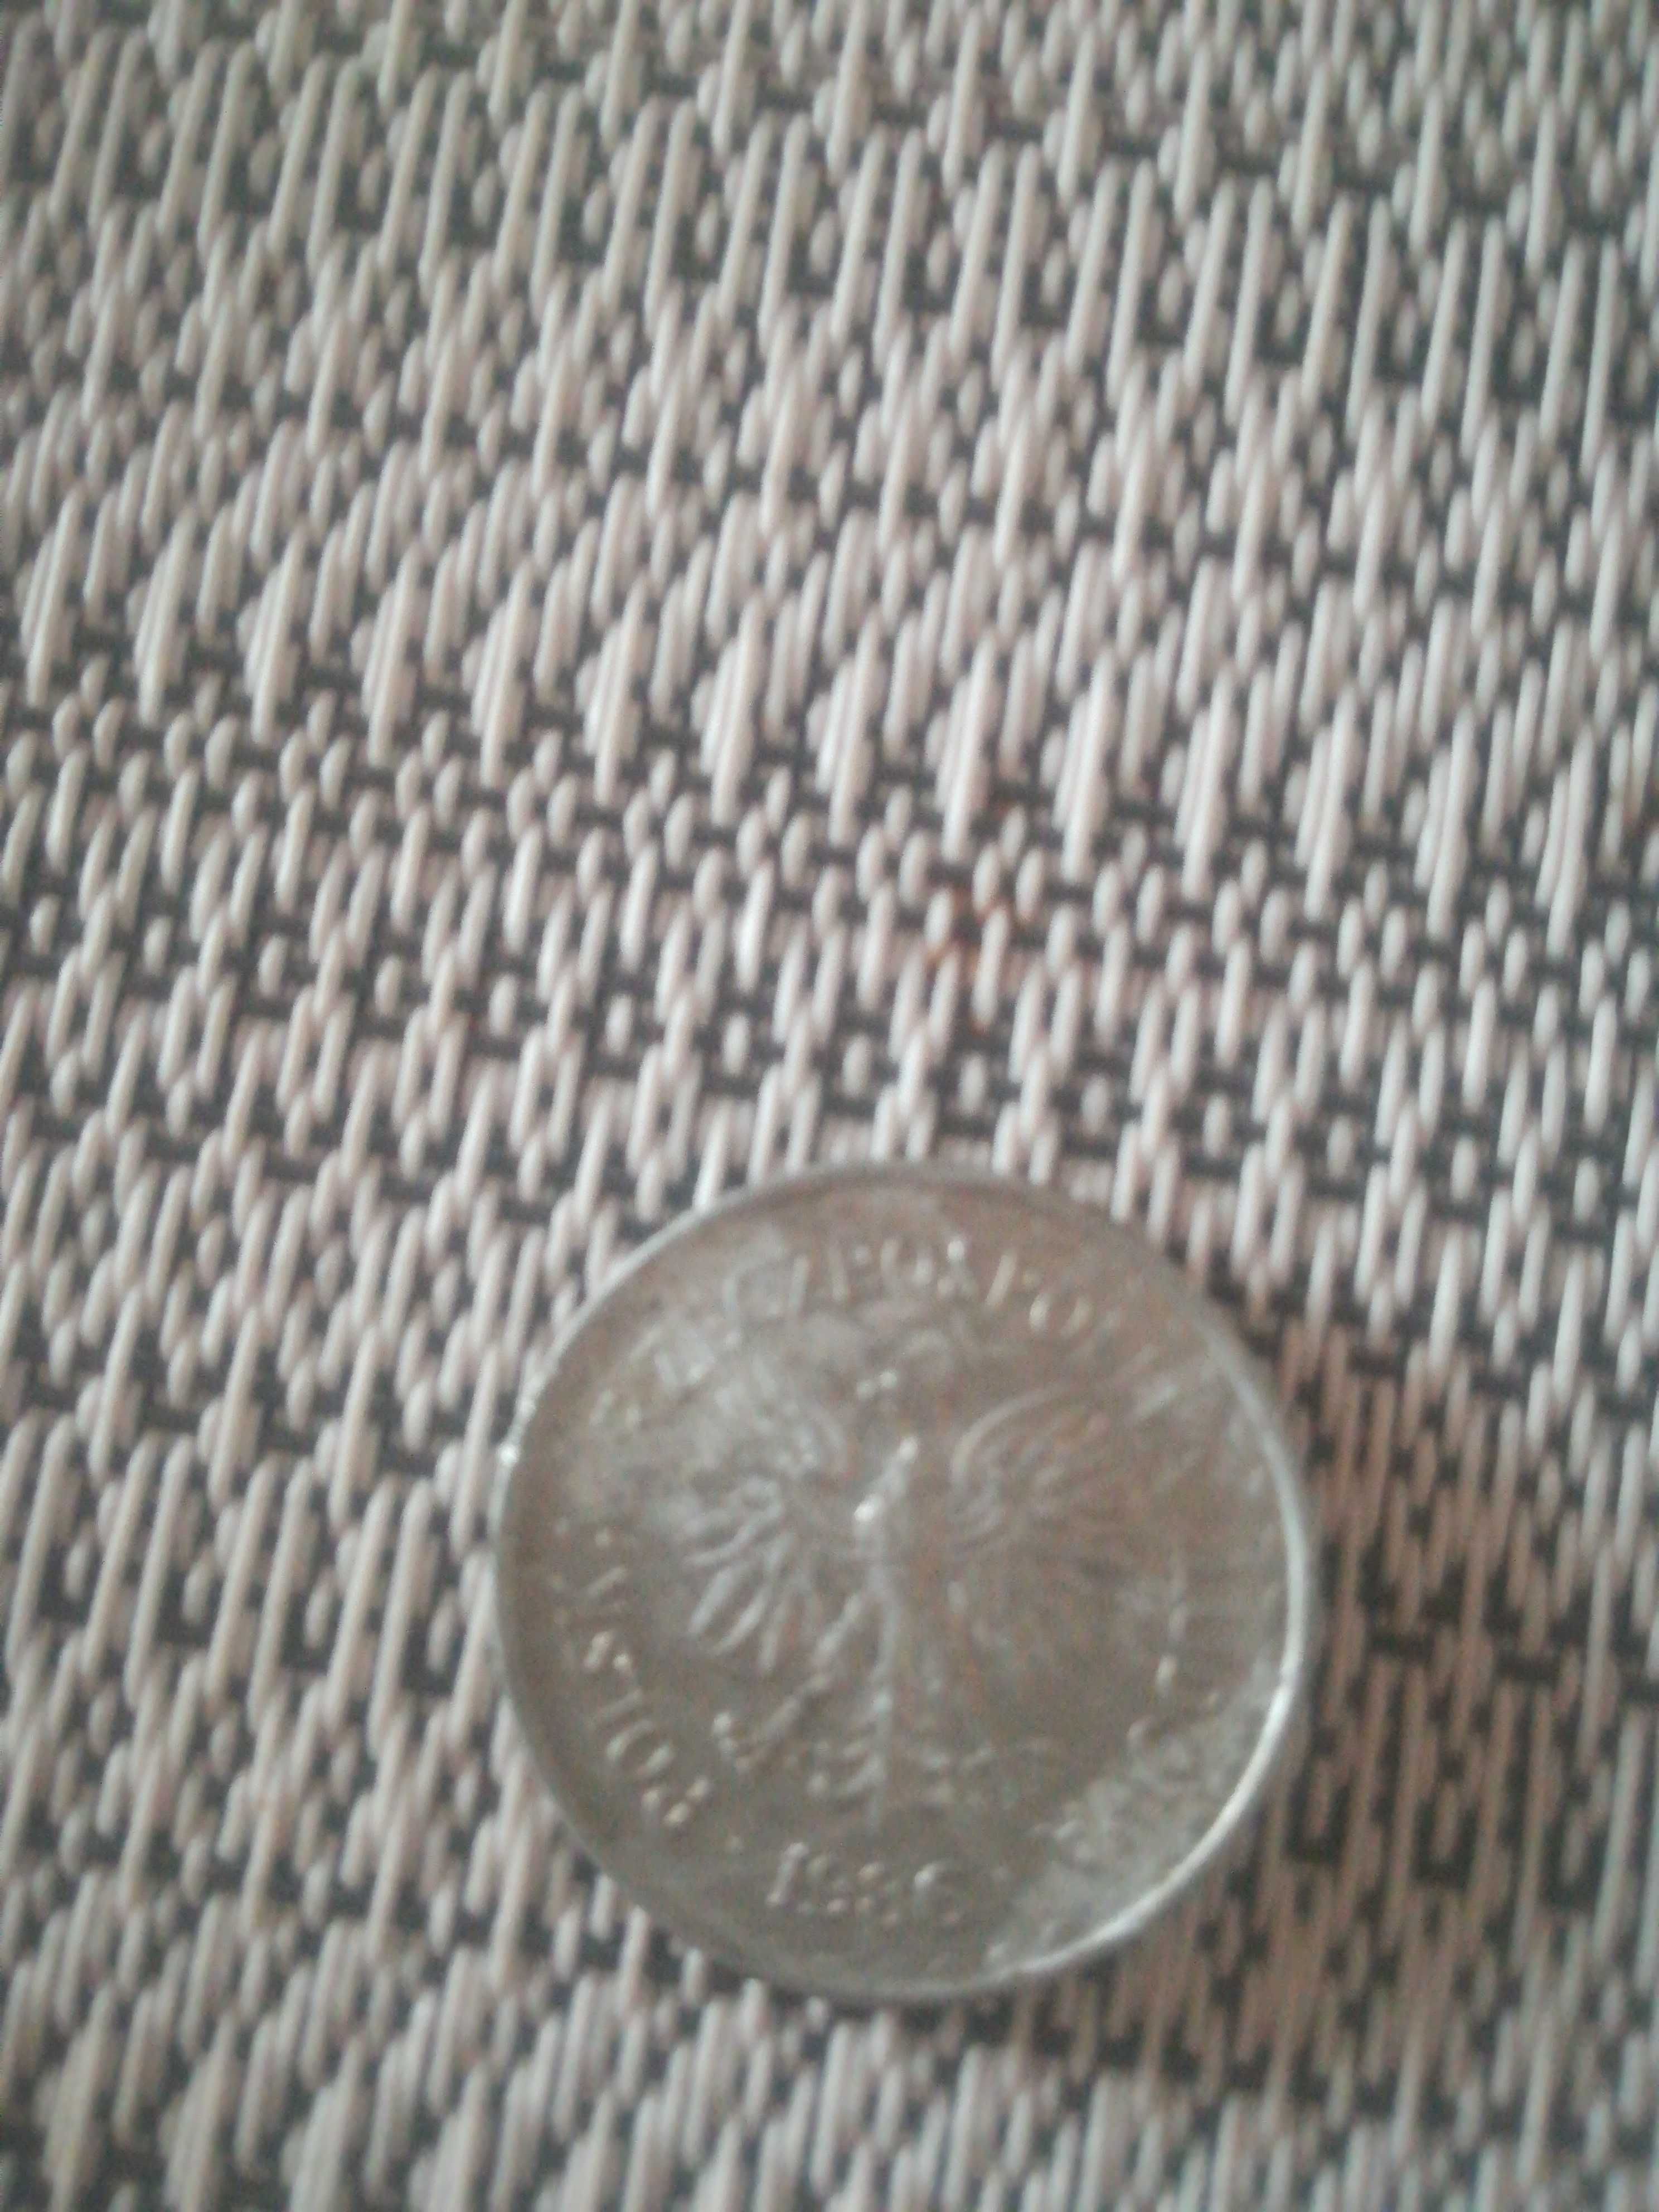 Moneta 1 zł z roku 1986